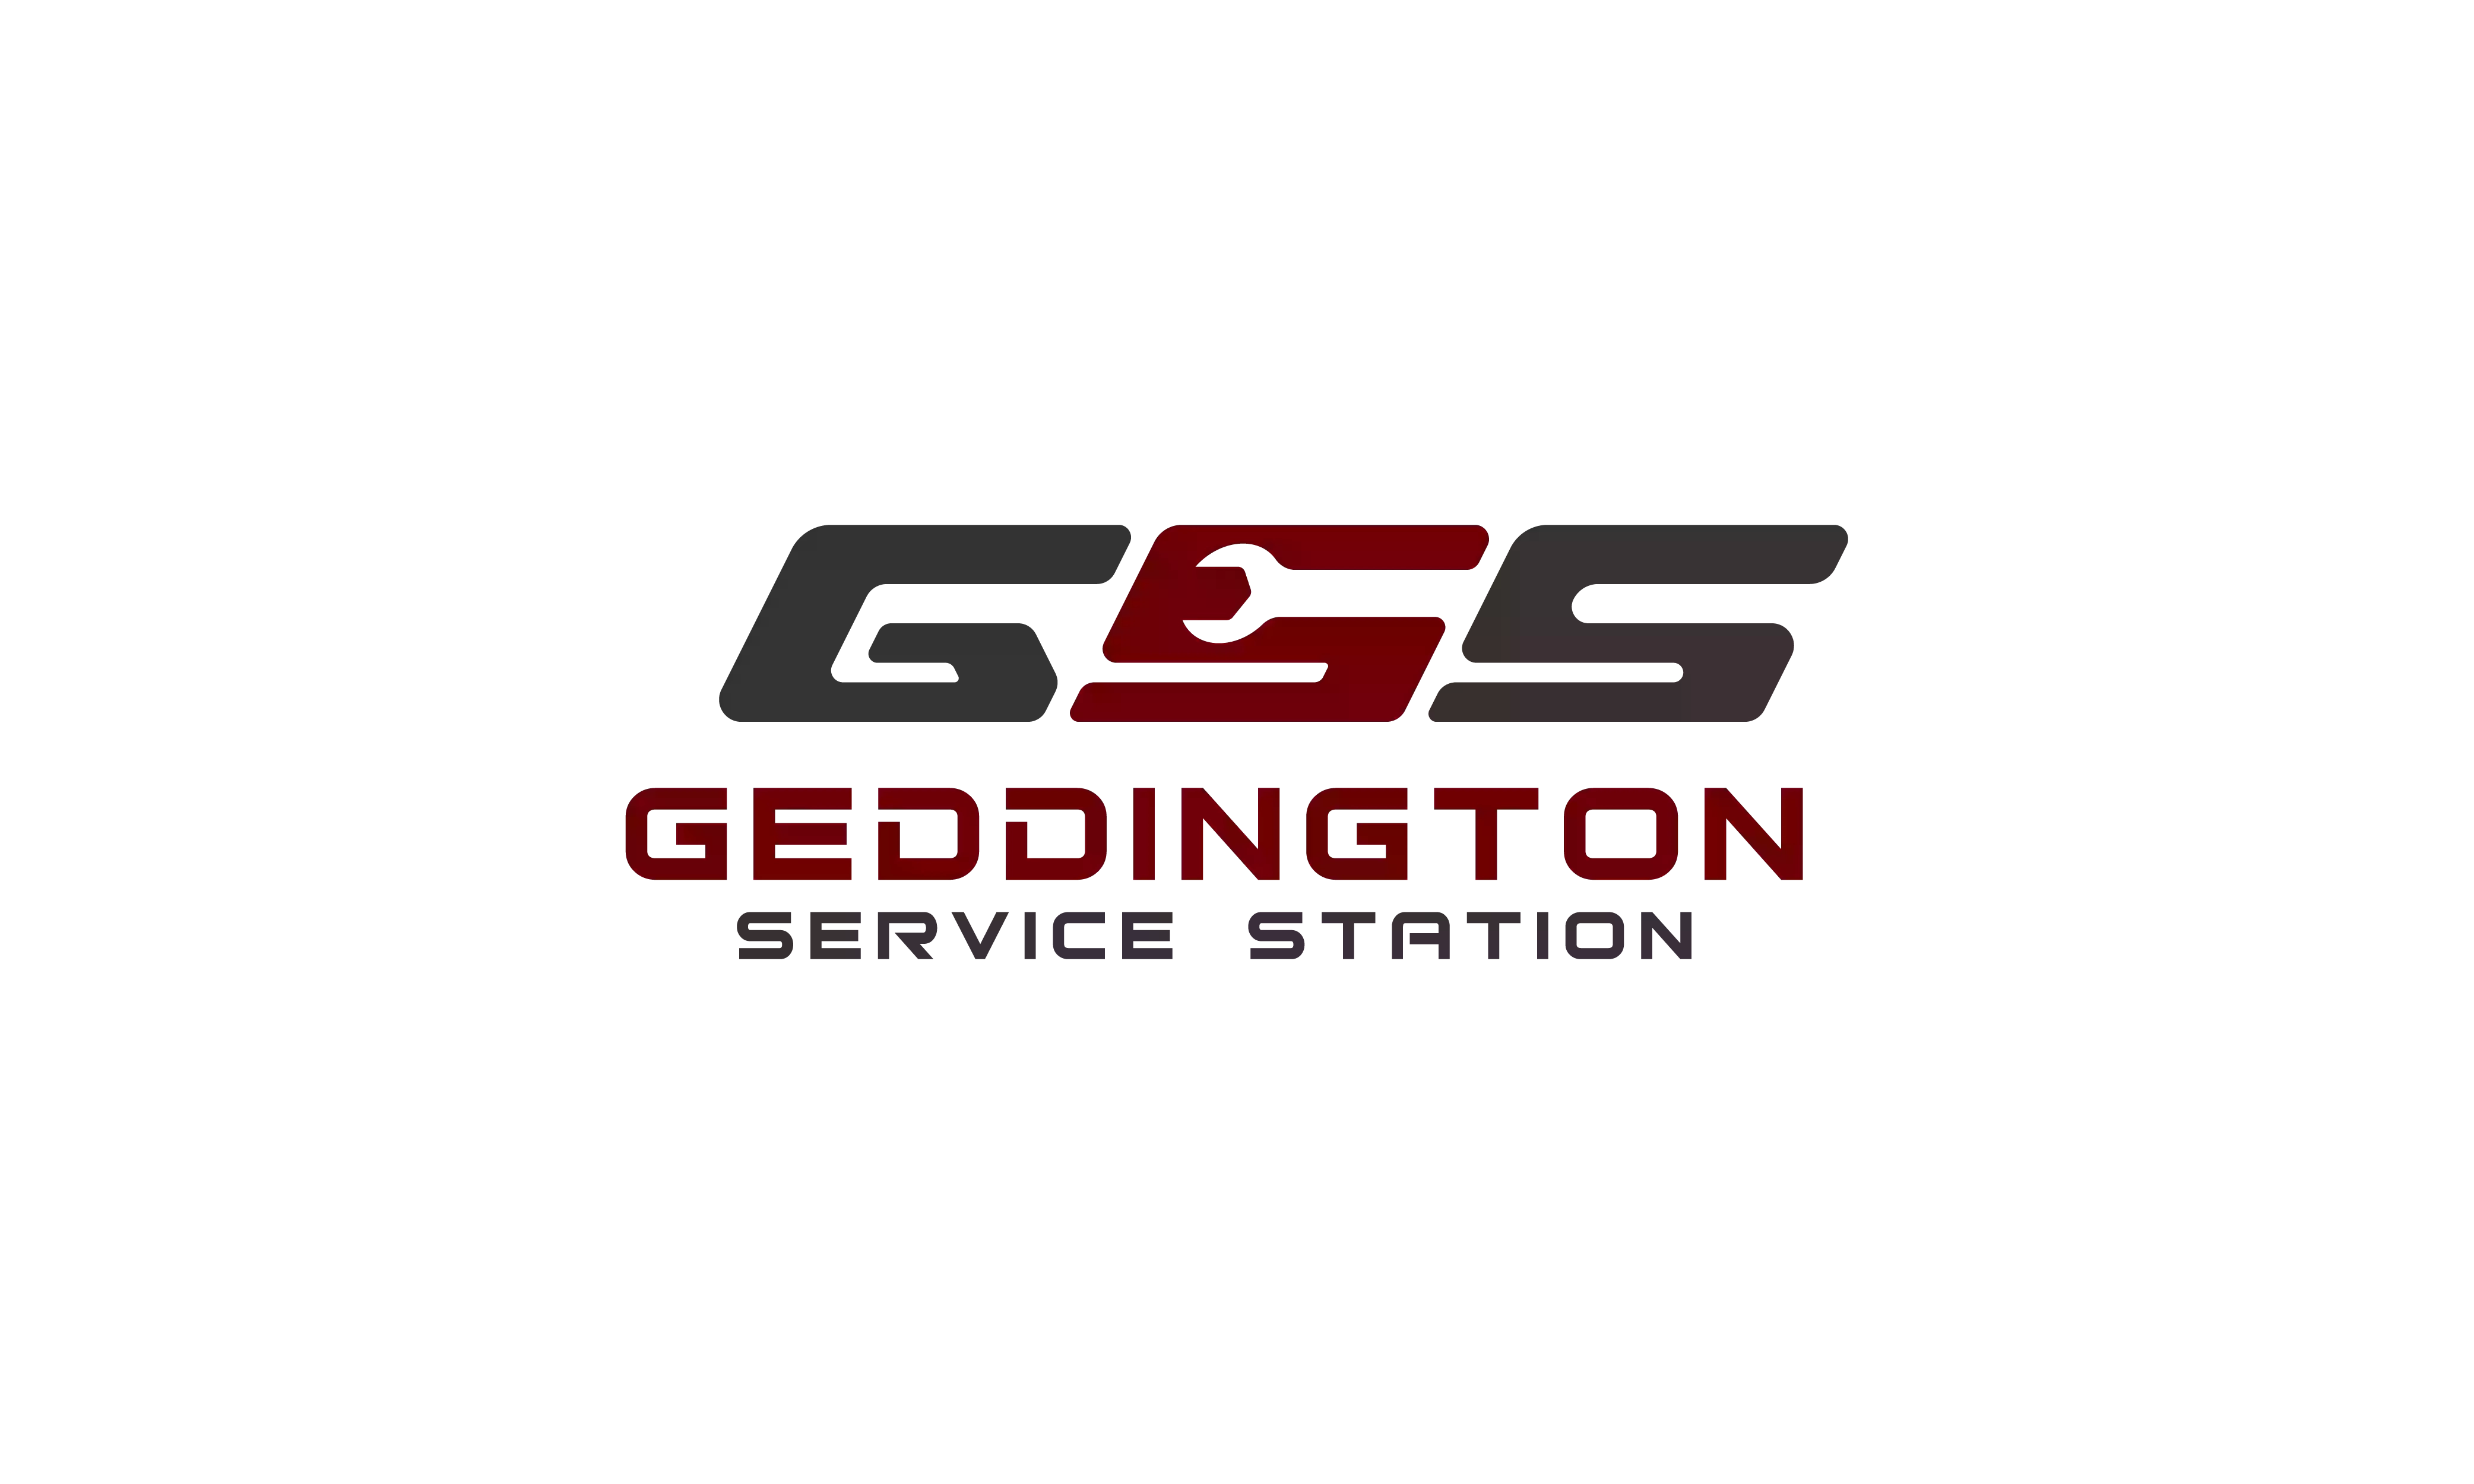 Geddington Service Station